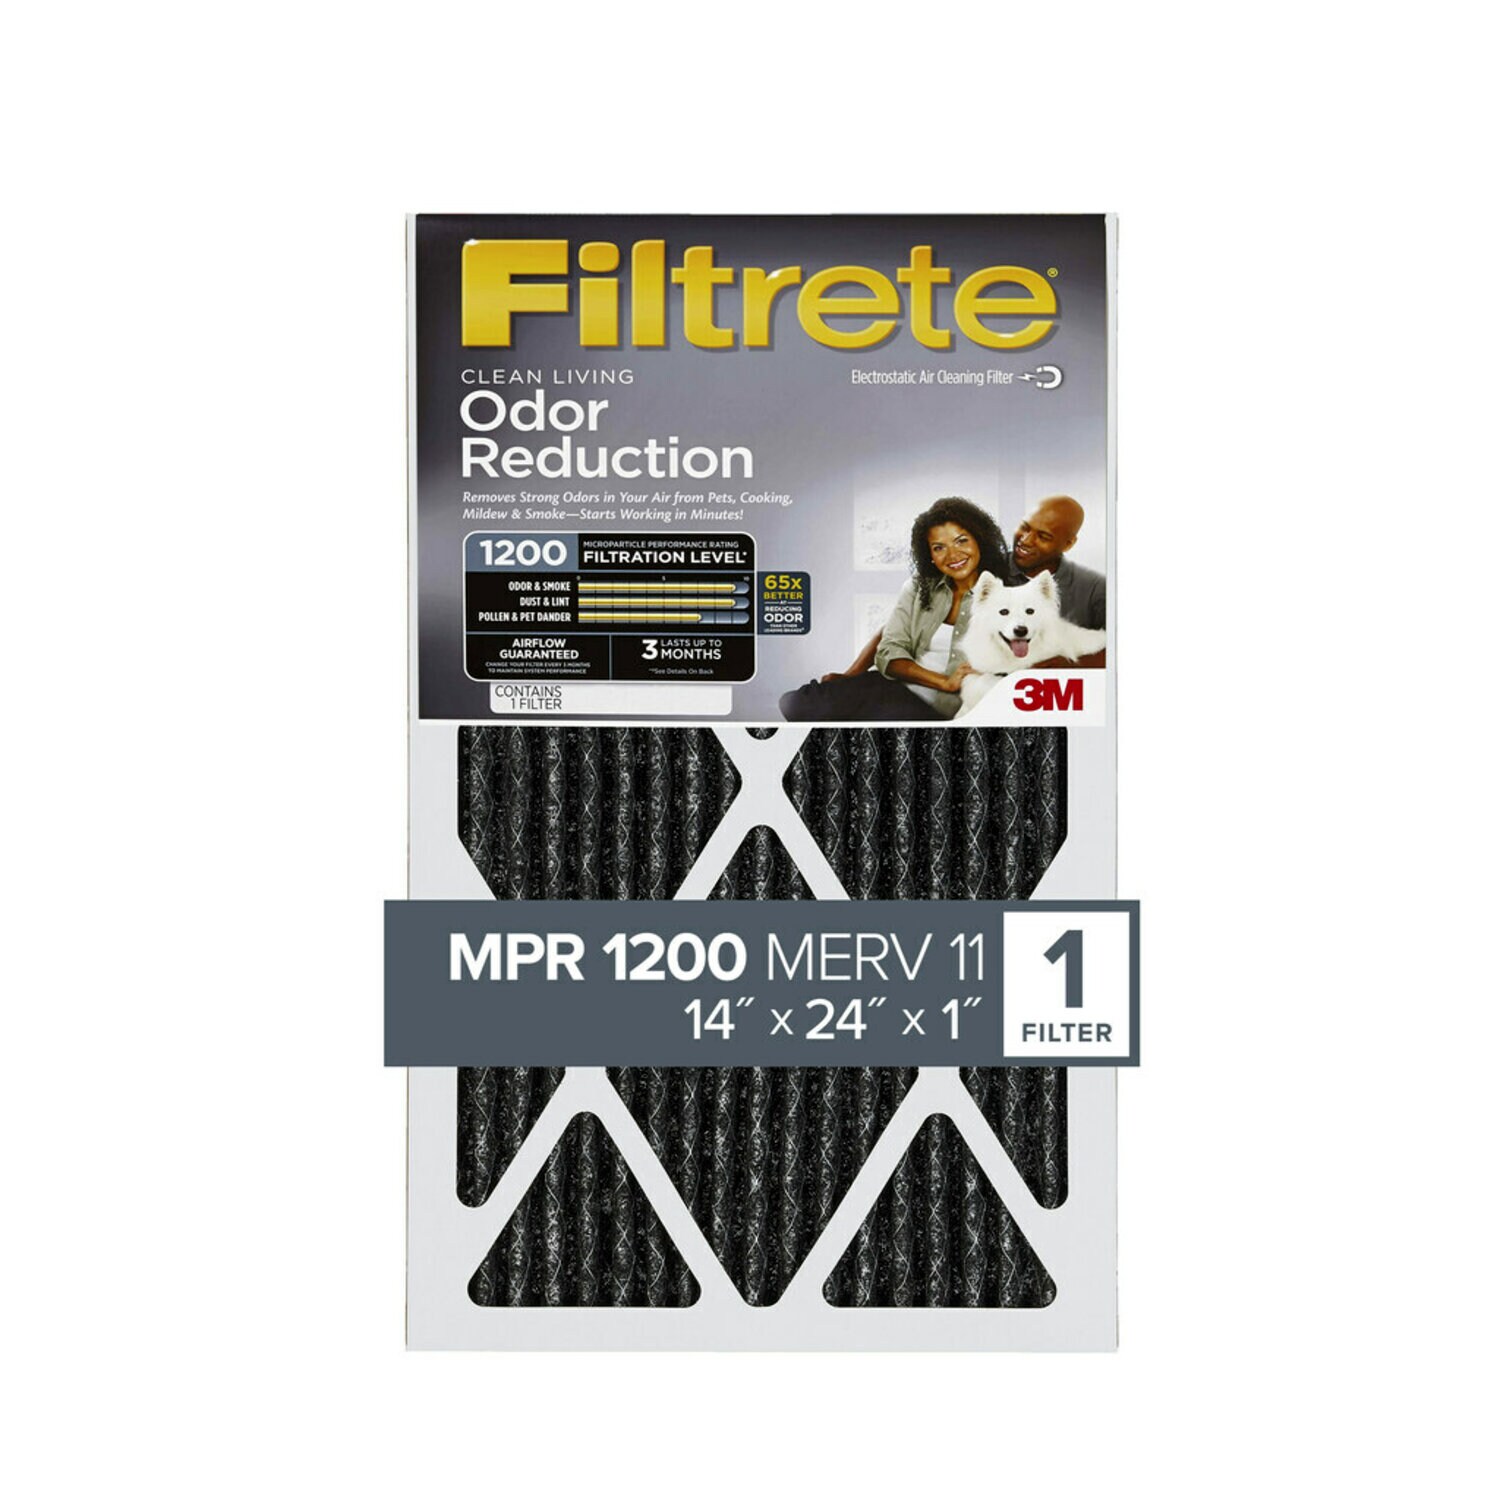 7010375248 - Filtrete Home Odor Reduction Filter HOME23-4, 14 in x 24 in x 1 in
(35.5 cm x 60.9 cm x 2.5 cm)